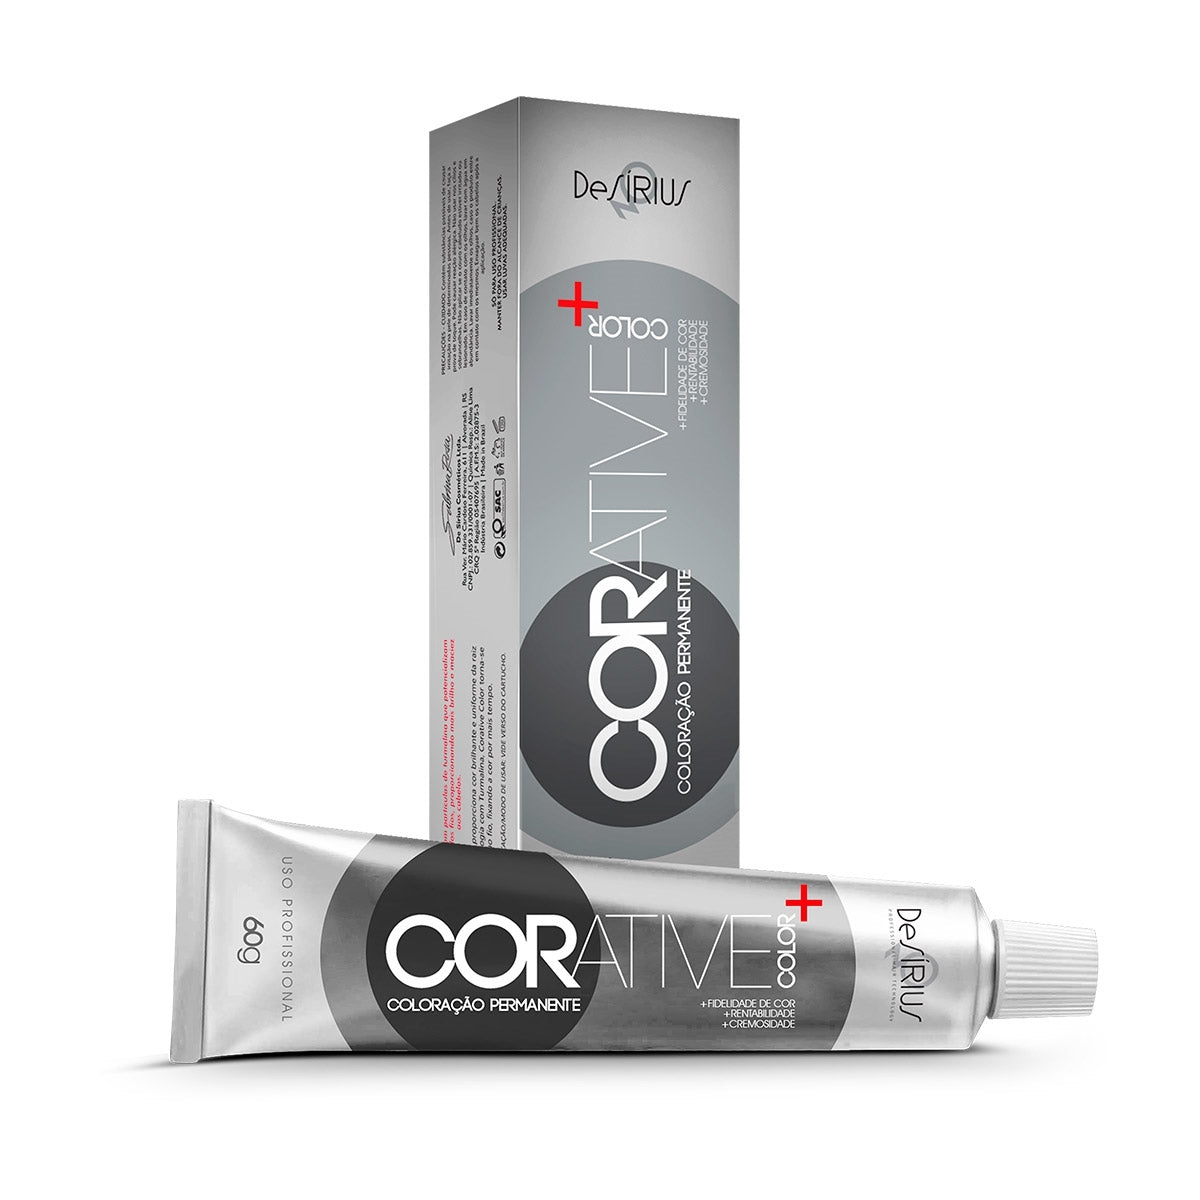 CORATIVE COLORATION - 6.0 DARK BLOND - 60G FS Cosmetics